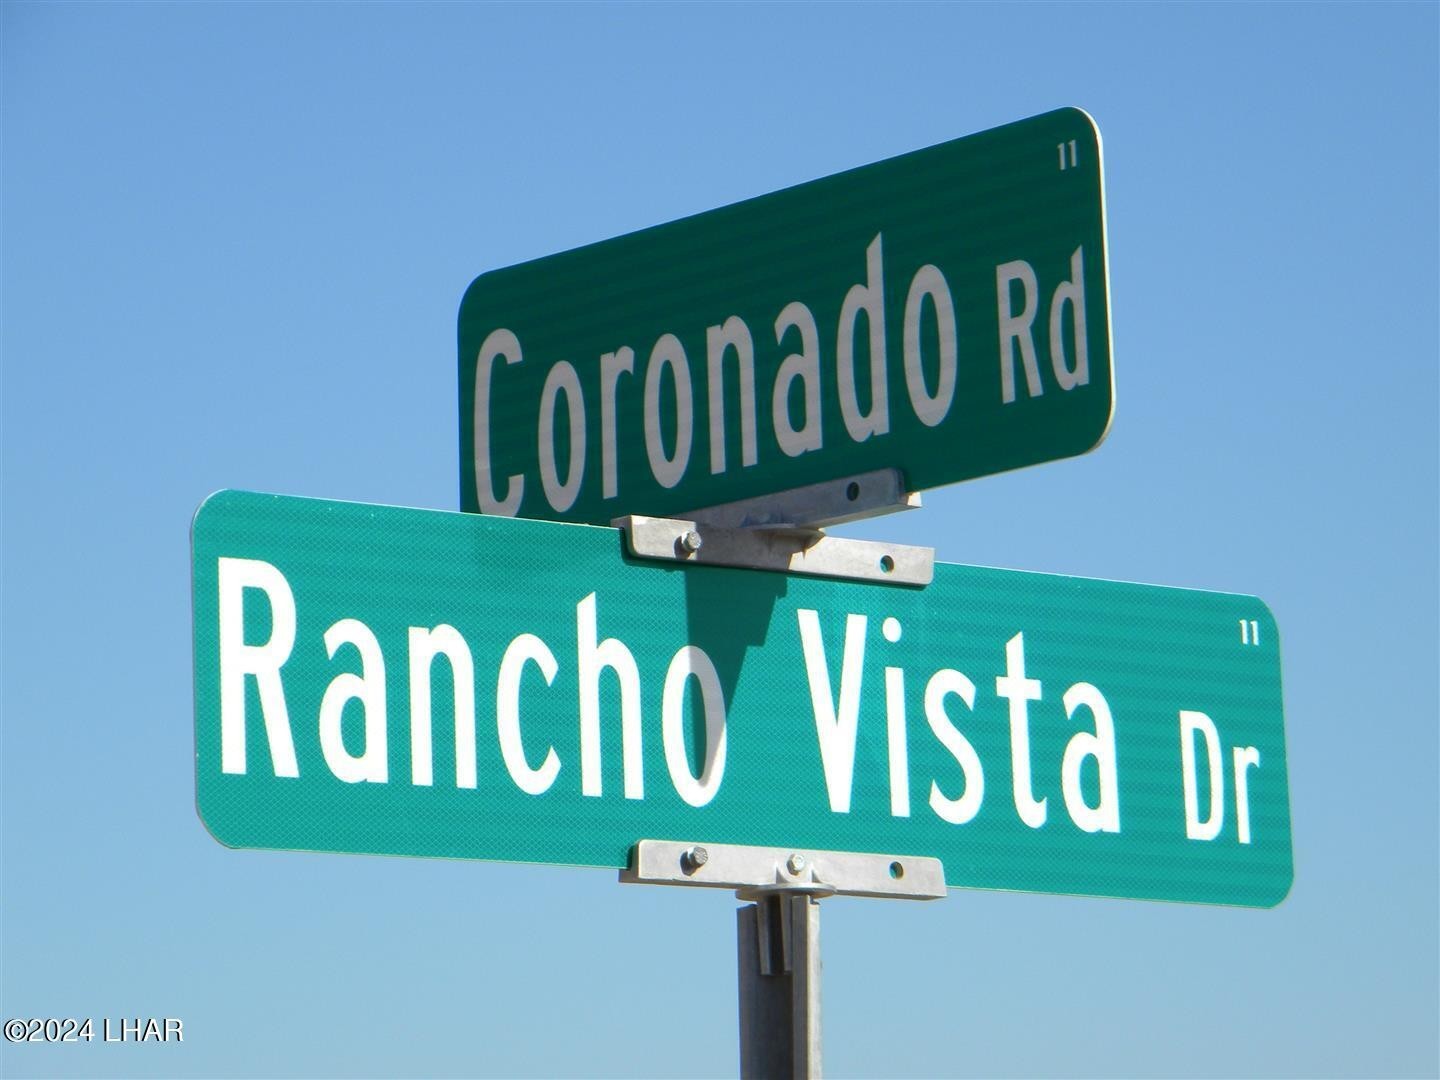 2. 7521 N Rancho Vista Dr